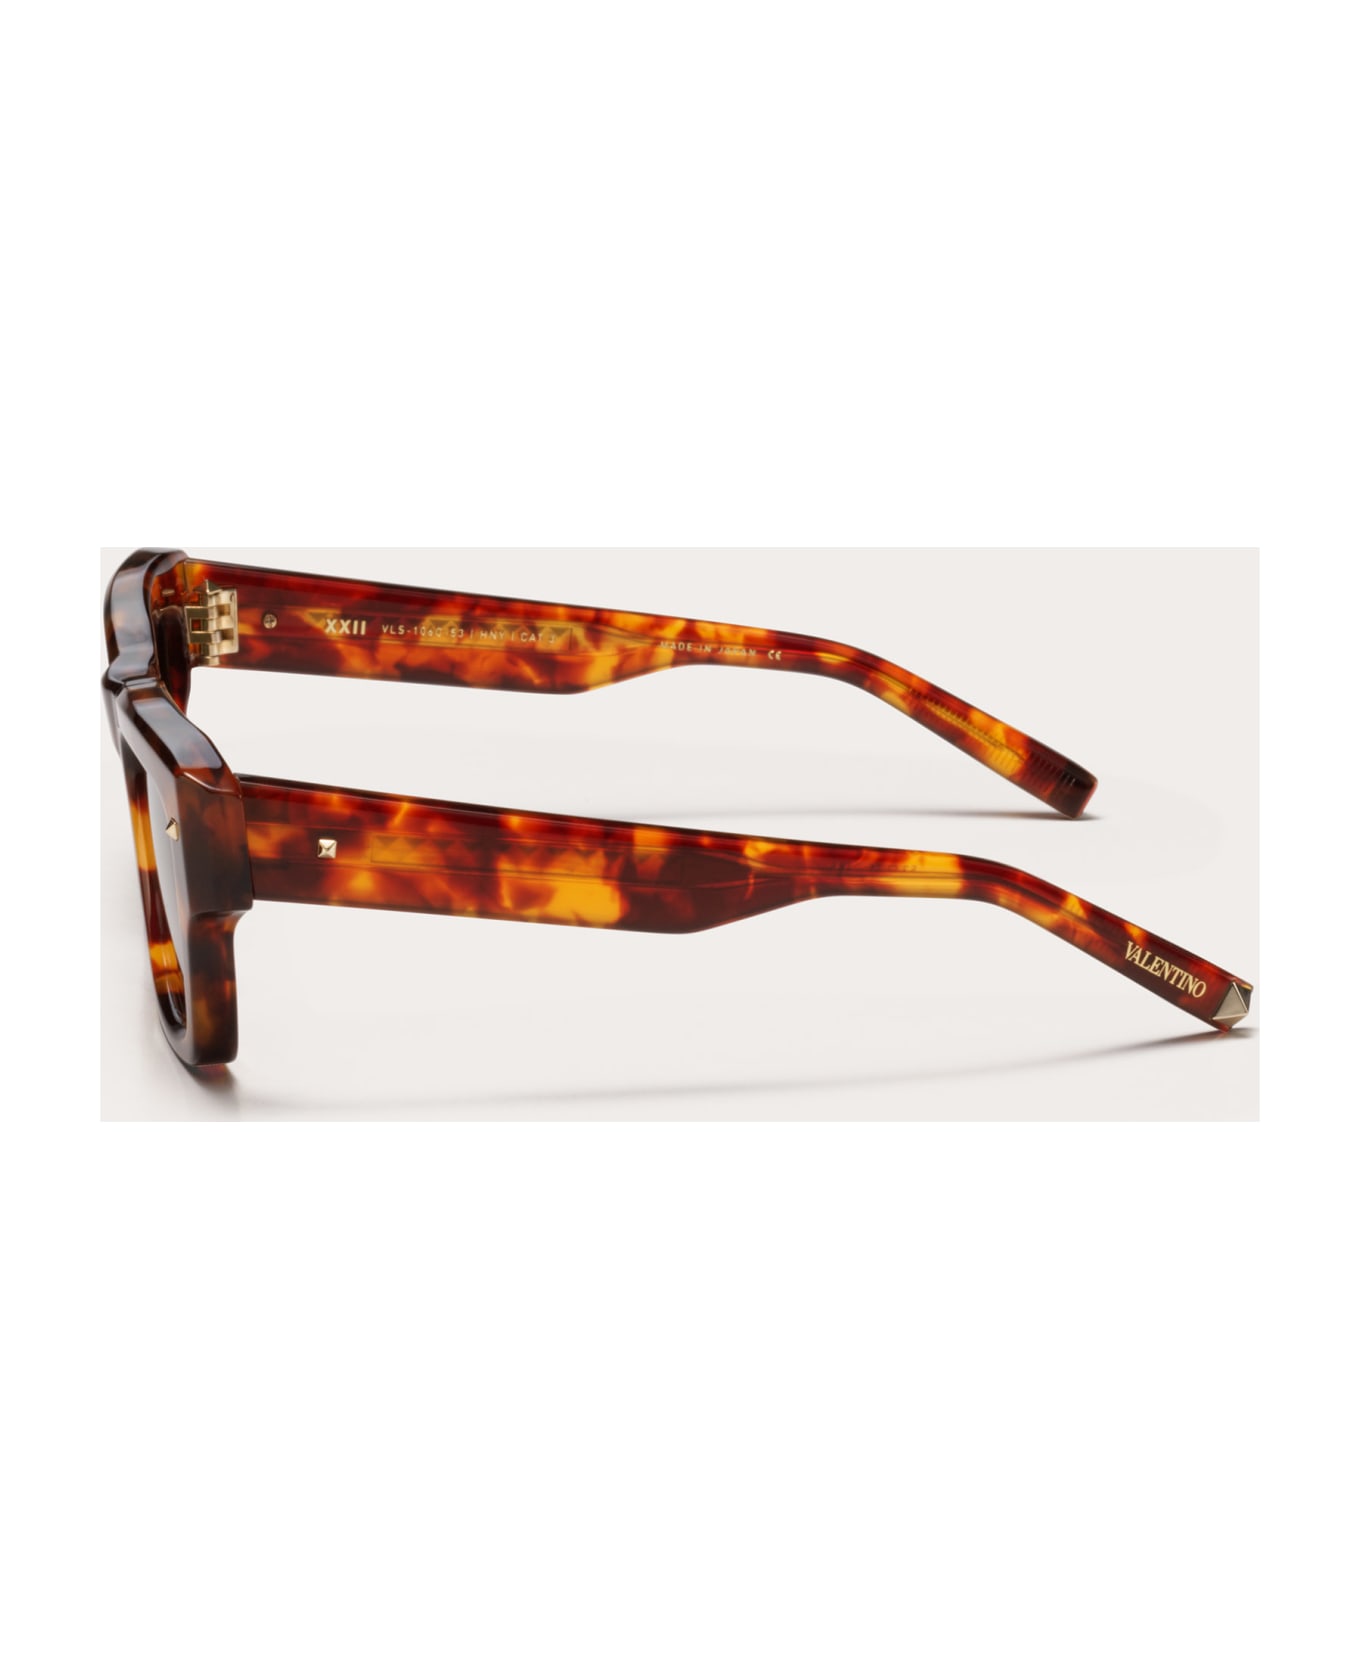 Valentino Eyewear Xxii - Honey Tortoise Sunglasses - Tortoise